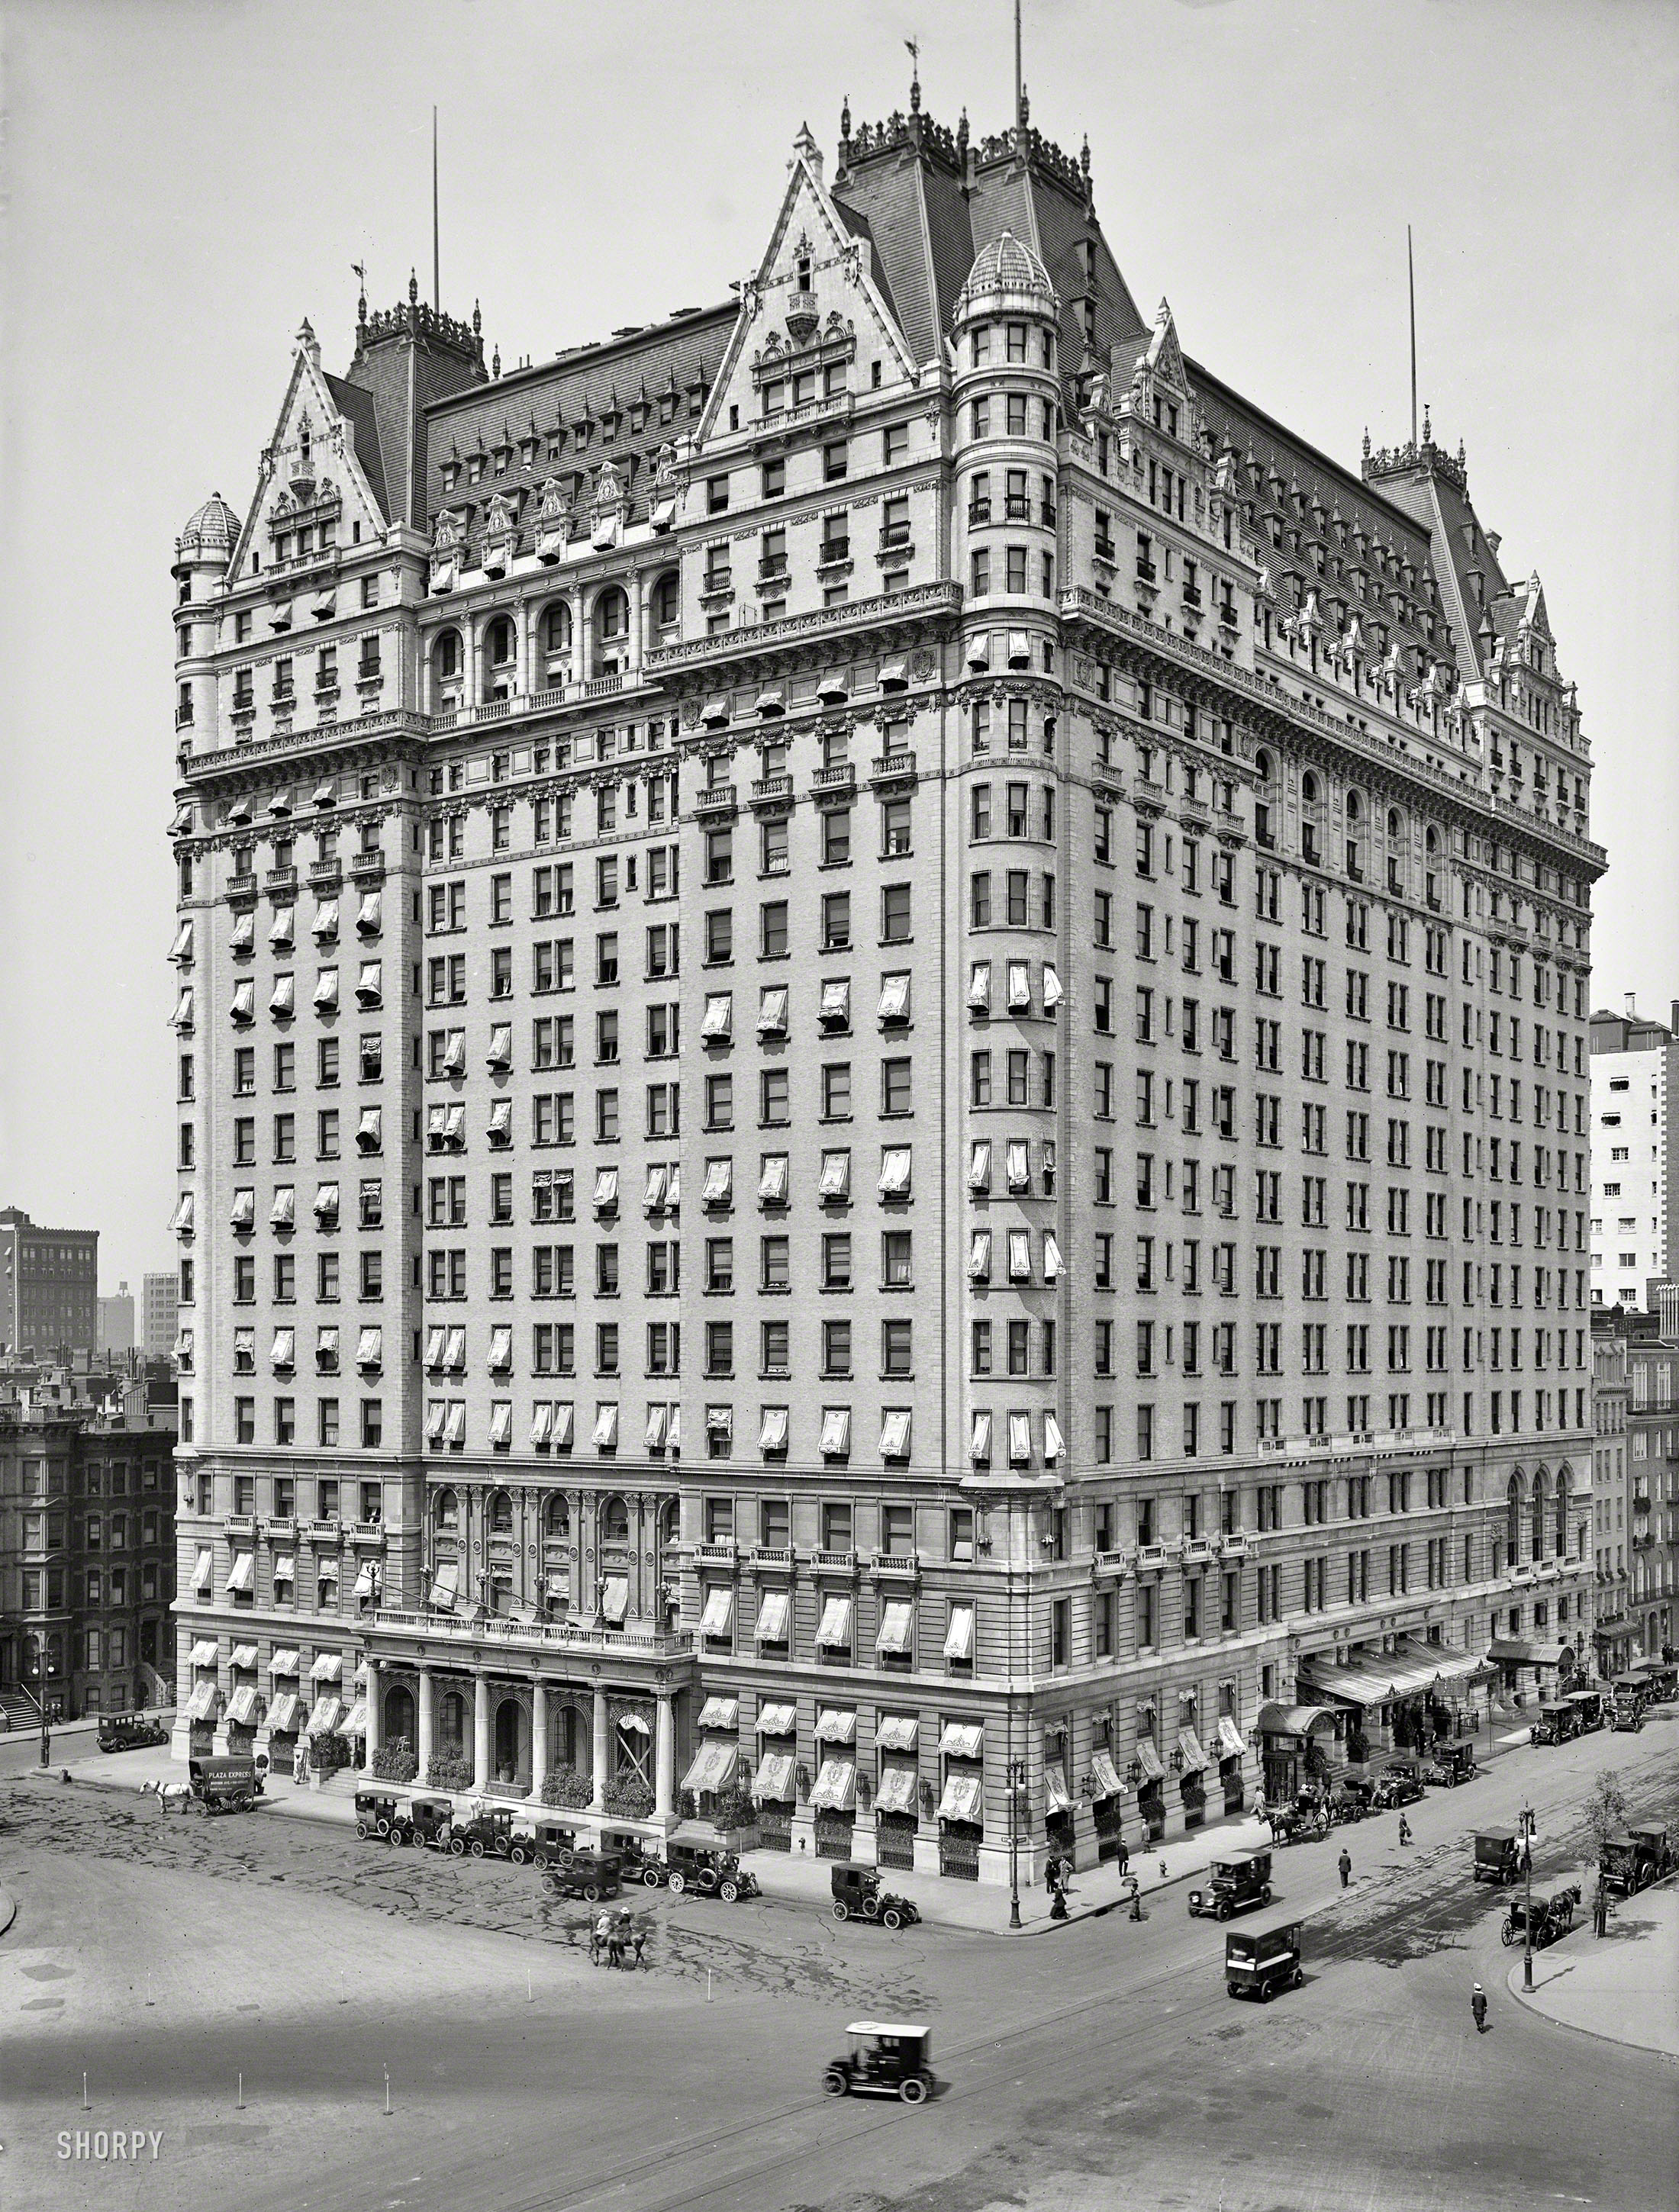 New York circa 1912. "Plaza Hotel, Fifth Avenue at 59th Street." The original "big box." 5x7 glass negative, Detroit Publishing Company. View full size.